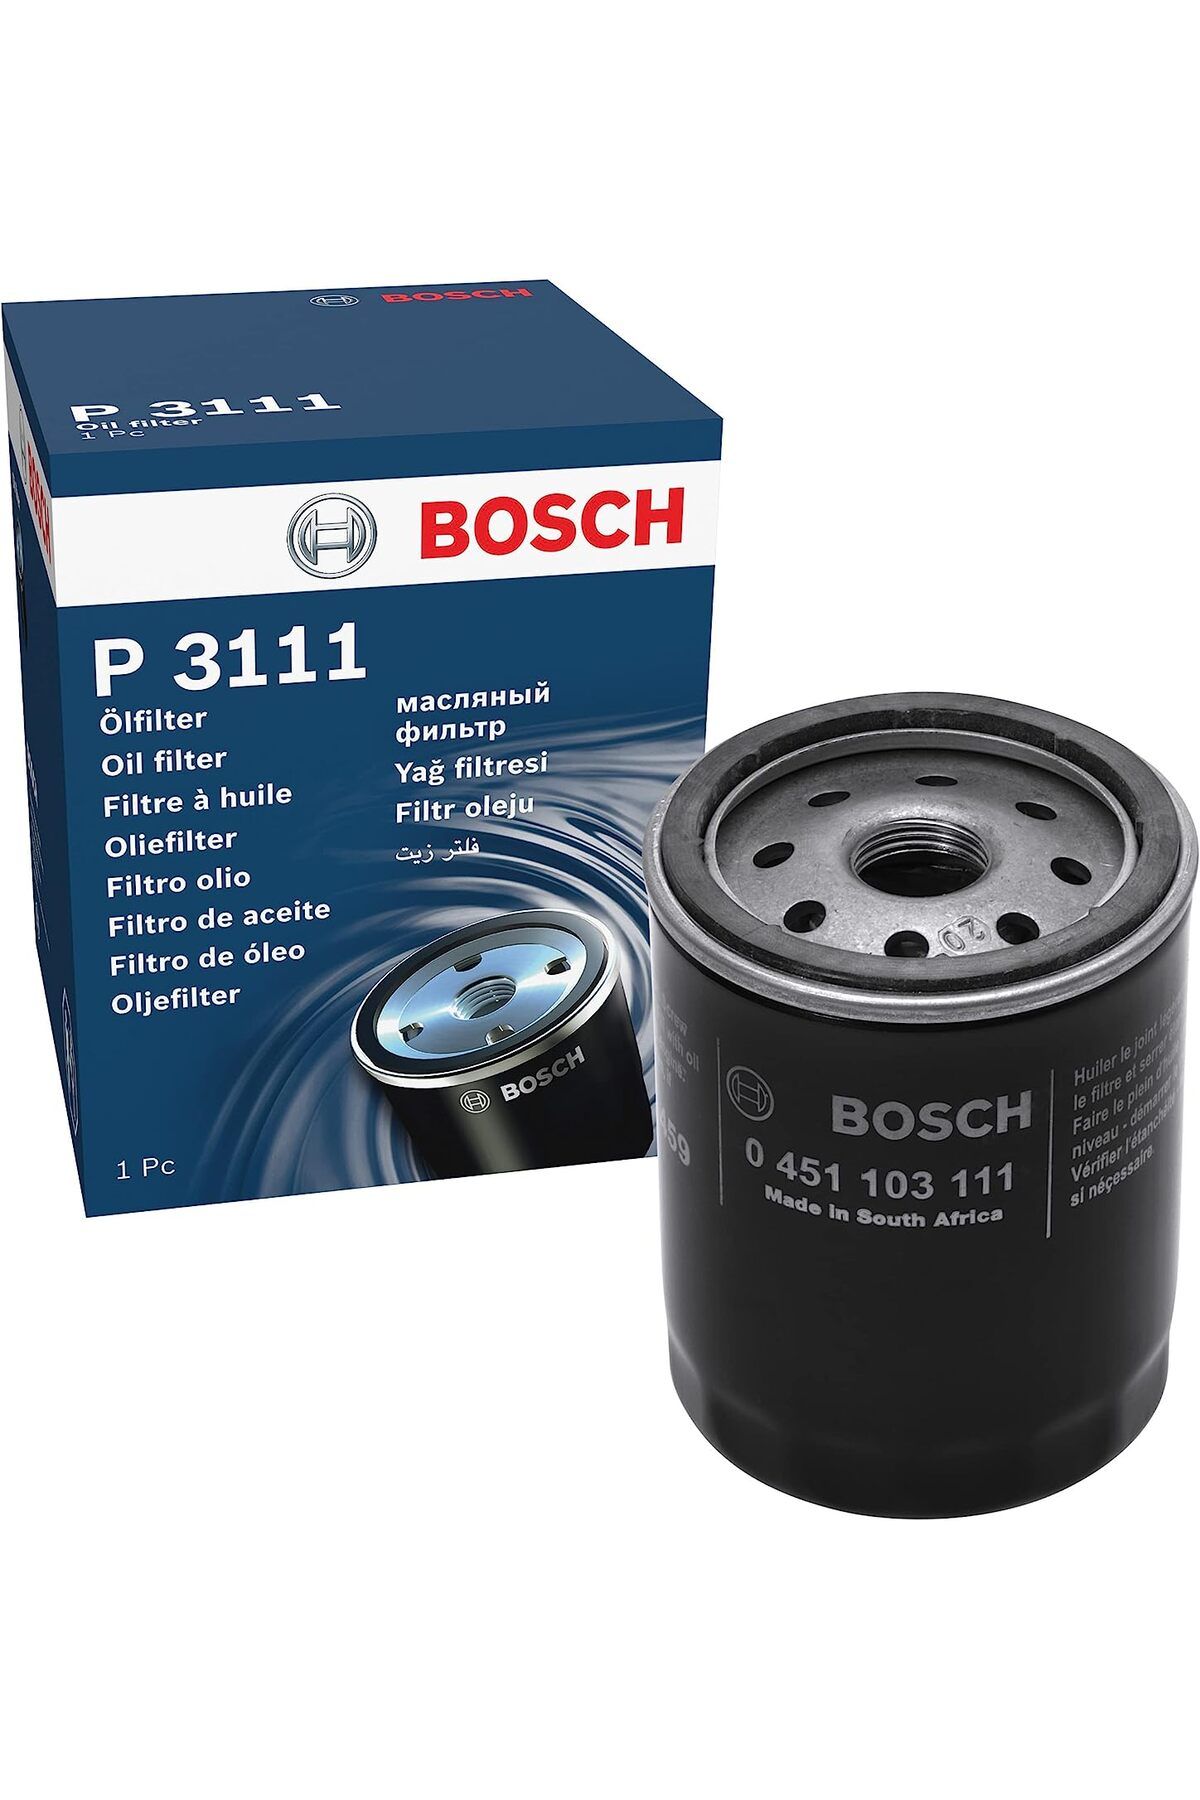 Bosch Yağ Filtresi 0451103111 FORD C MAX,FORD FOCUS,FORD GALAXY,FORD MONDEO,FORD S MAX,